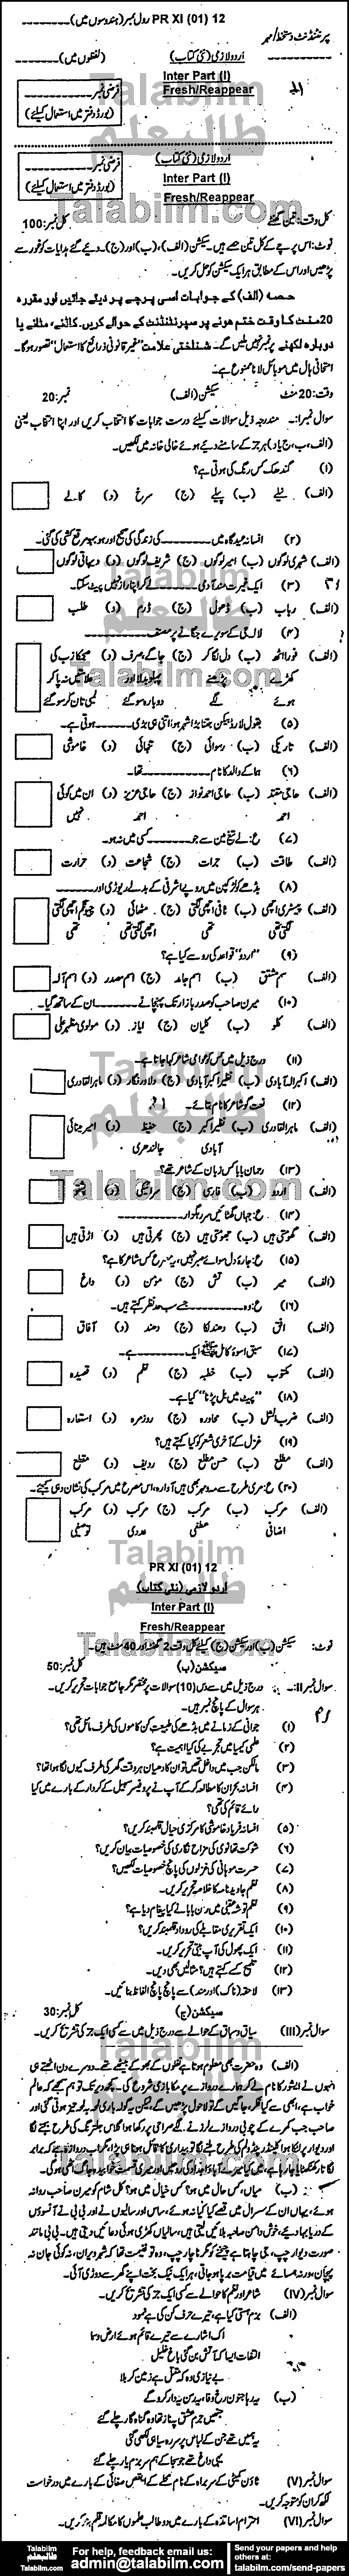 Urdu 0 past paper for Group-I 2012